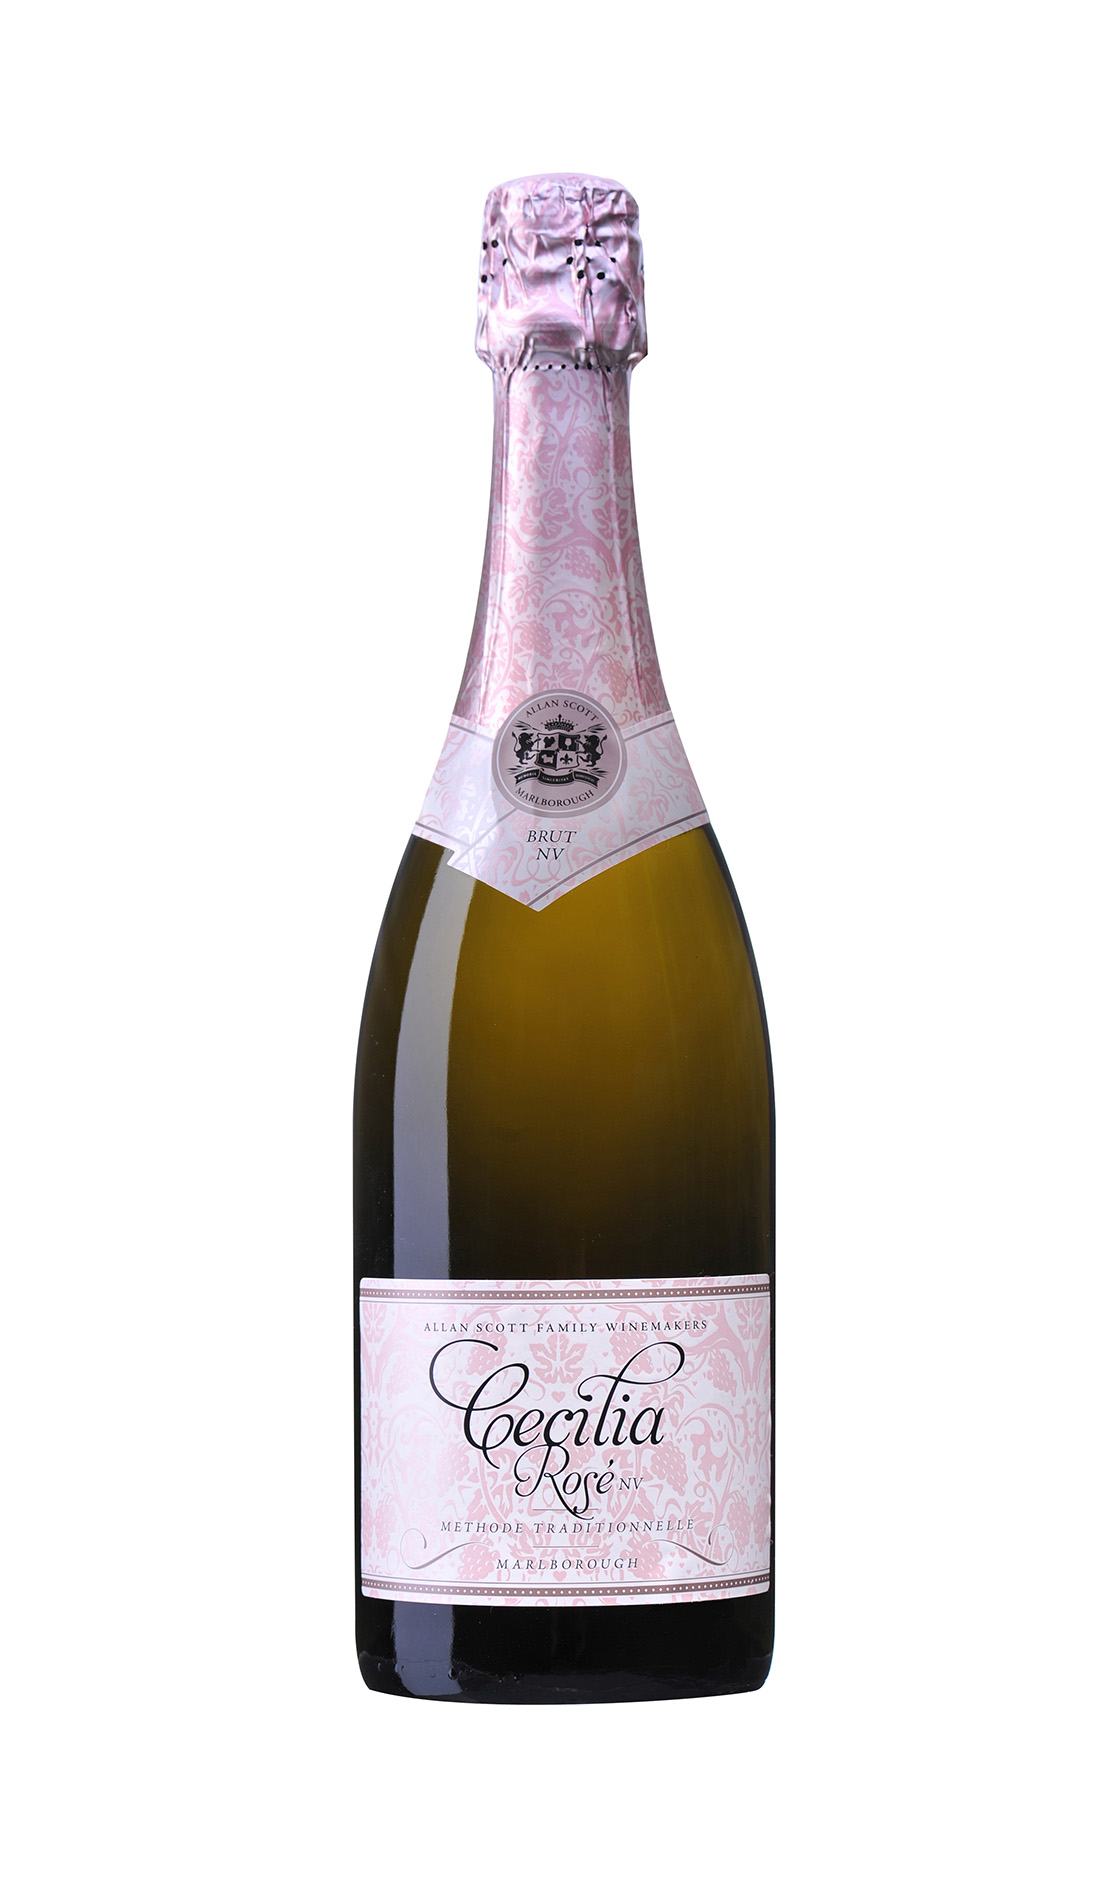 Allan Scott Family Winemakers Méthode Traditionnelle Cecilia Rosé, RRP$28.00, from leading supermarkets